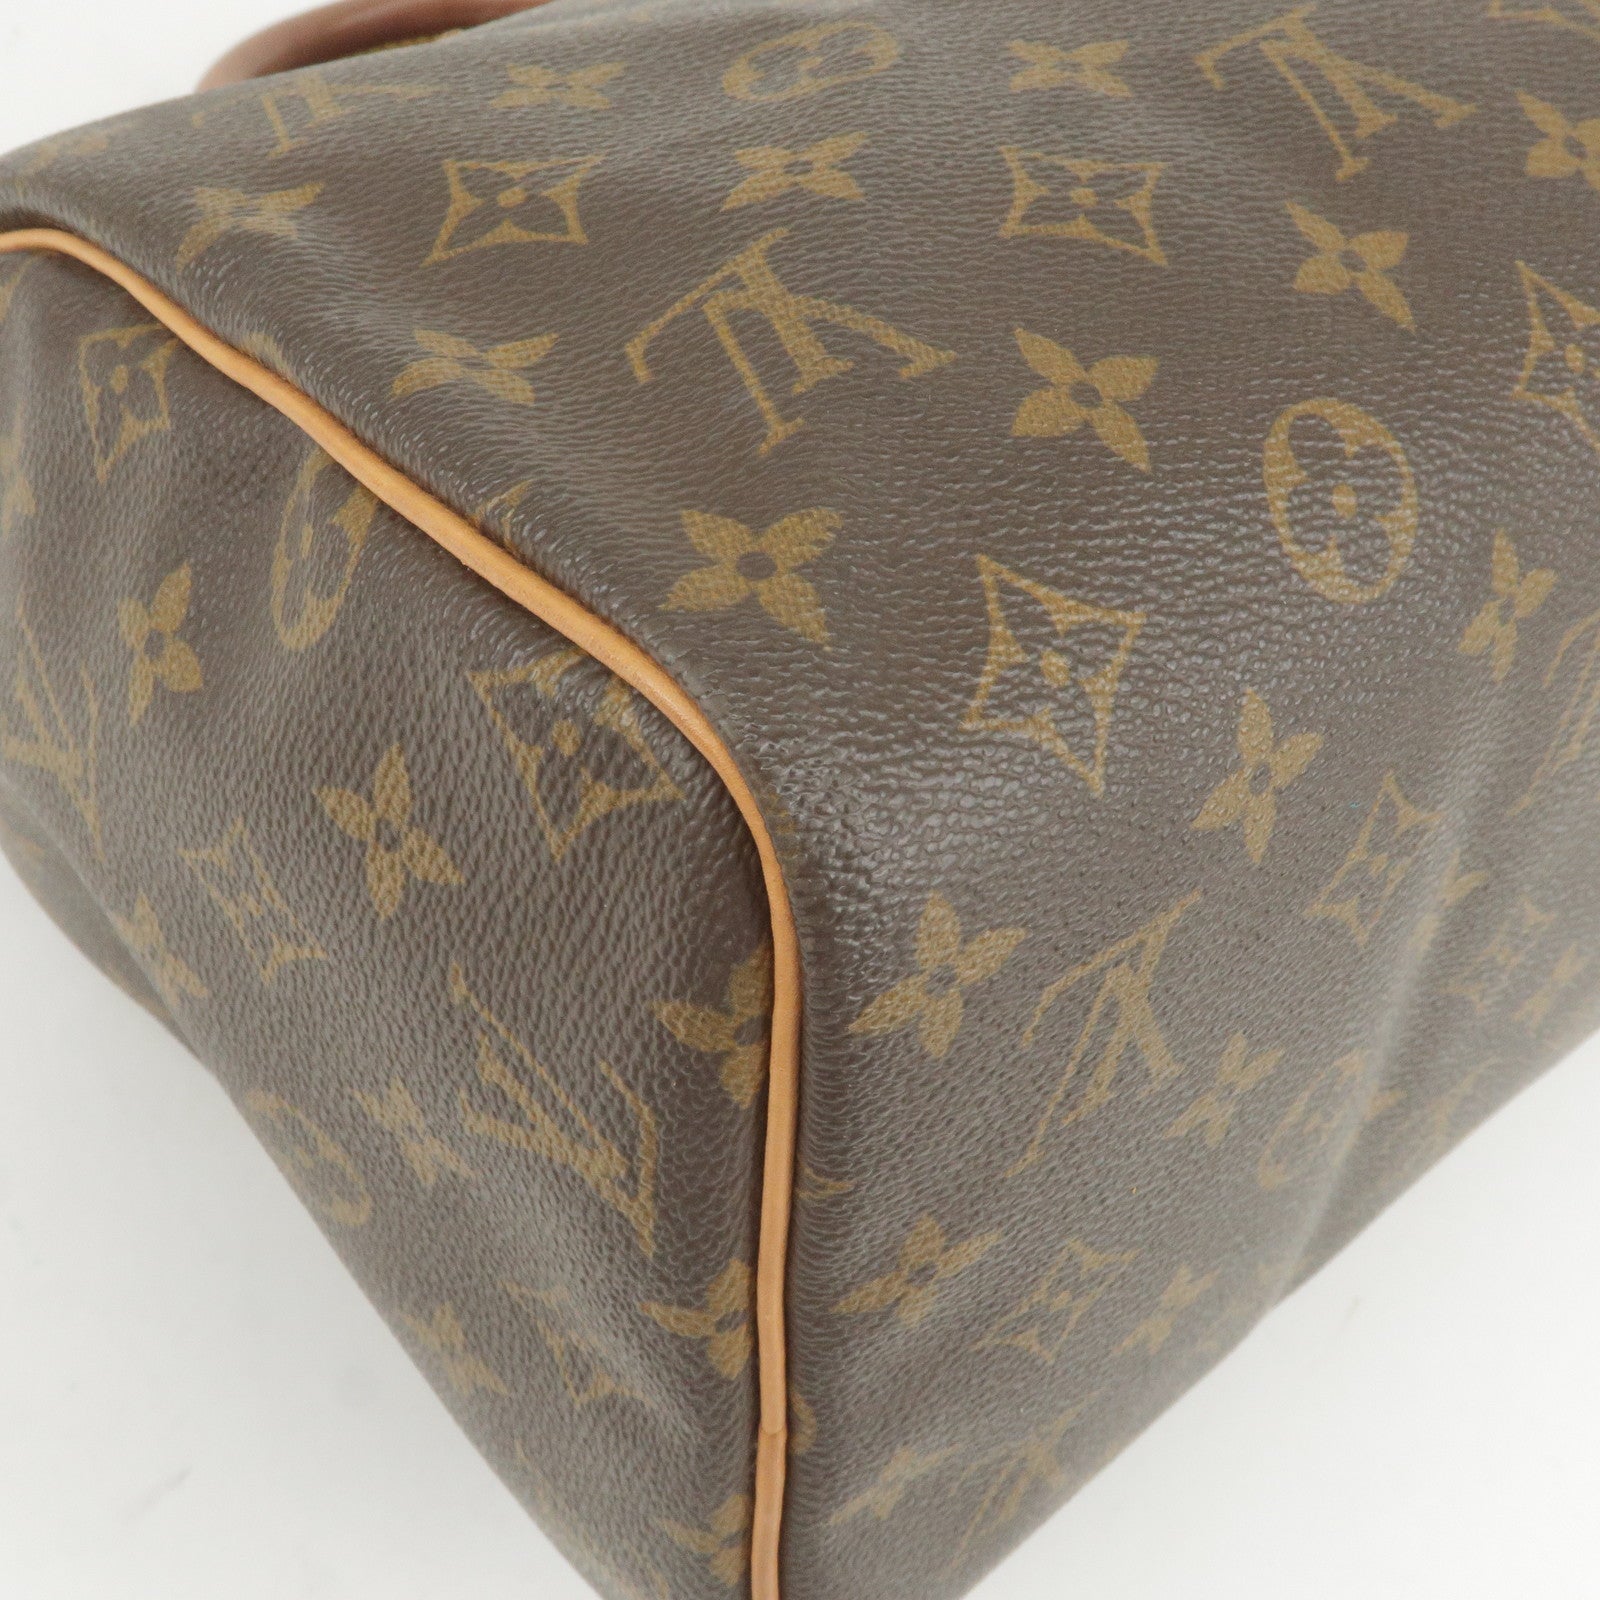 Louis Vuitton Kleber Black Leather Handbag (Pre-Owned)